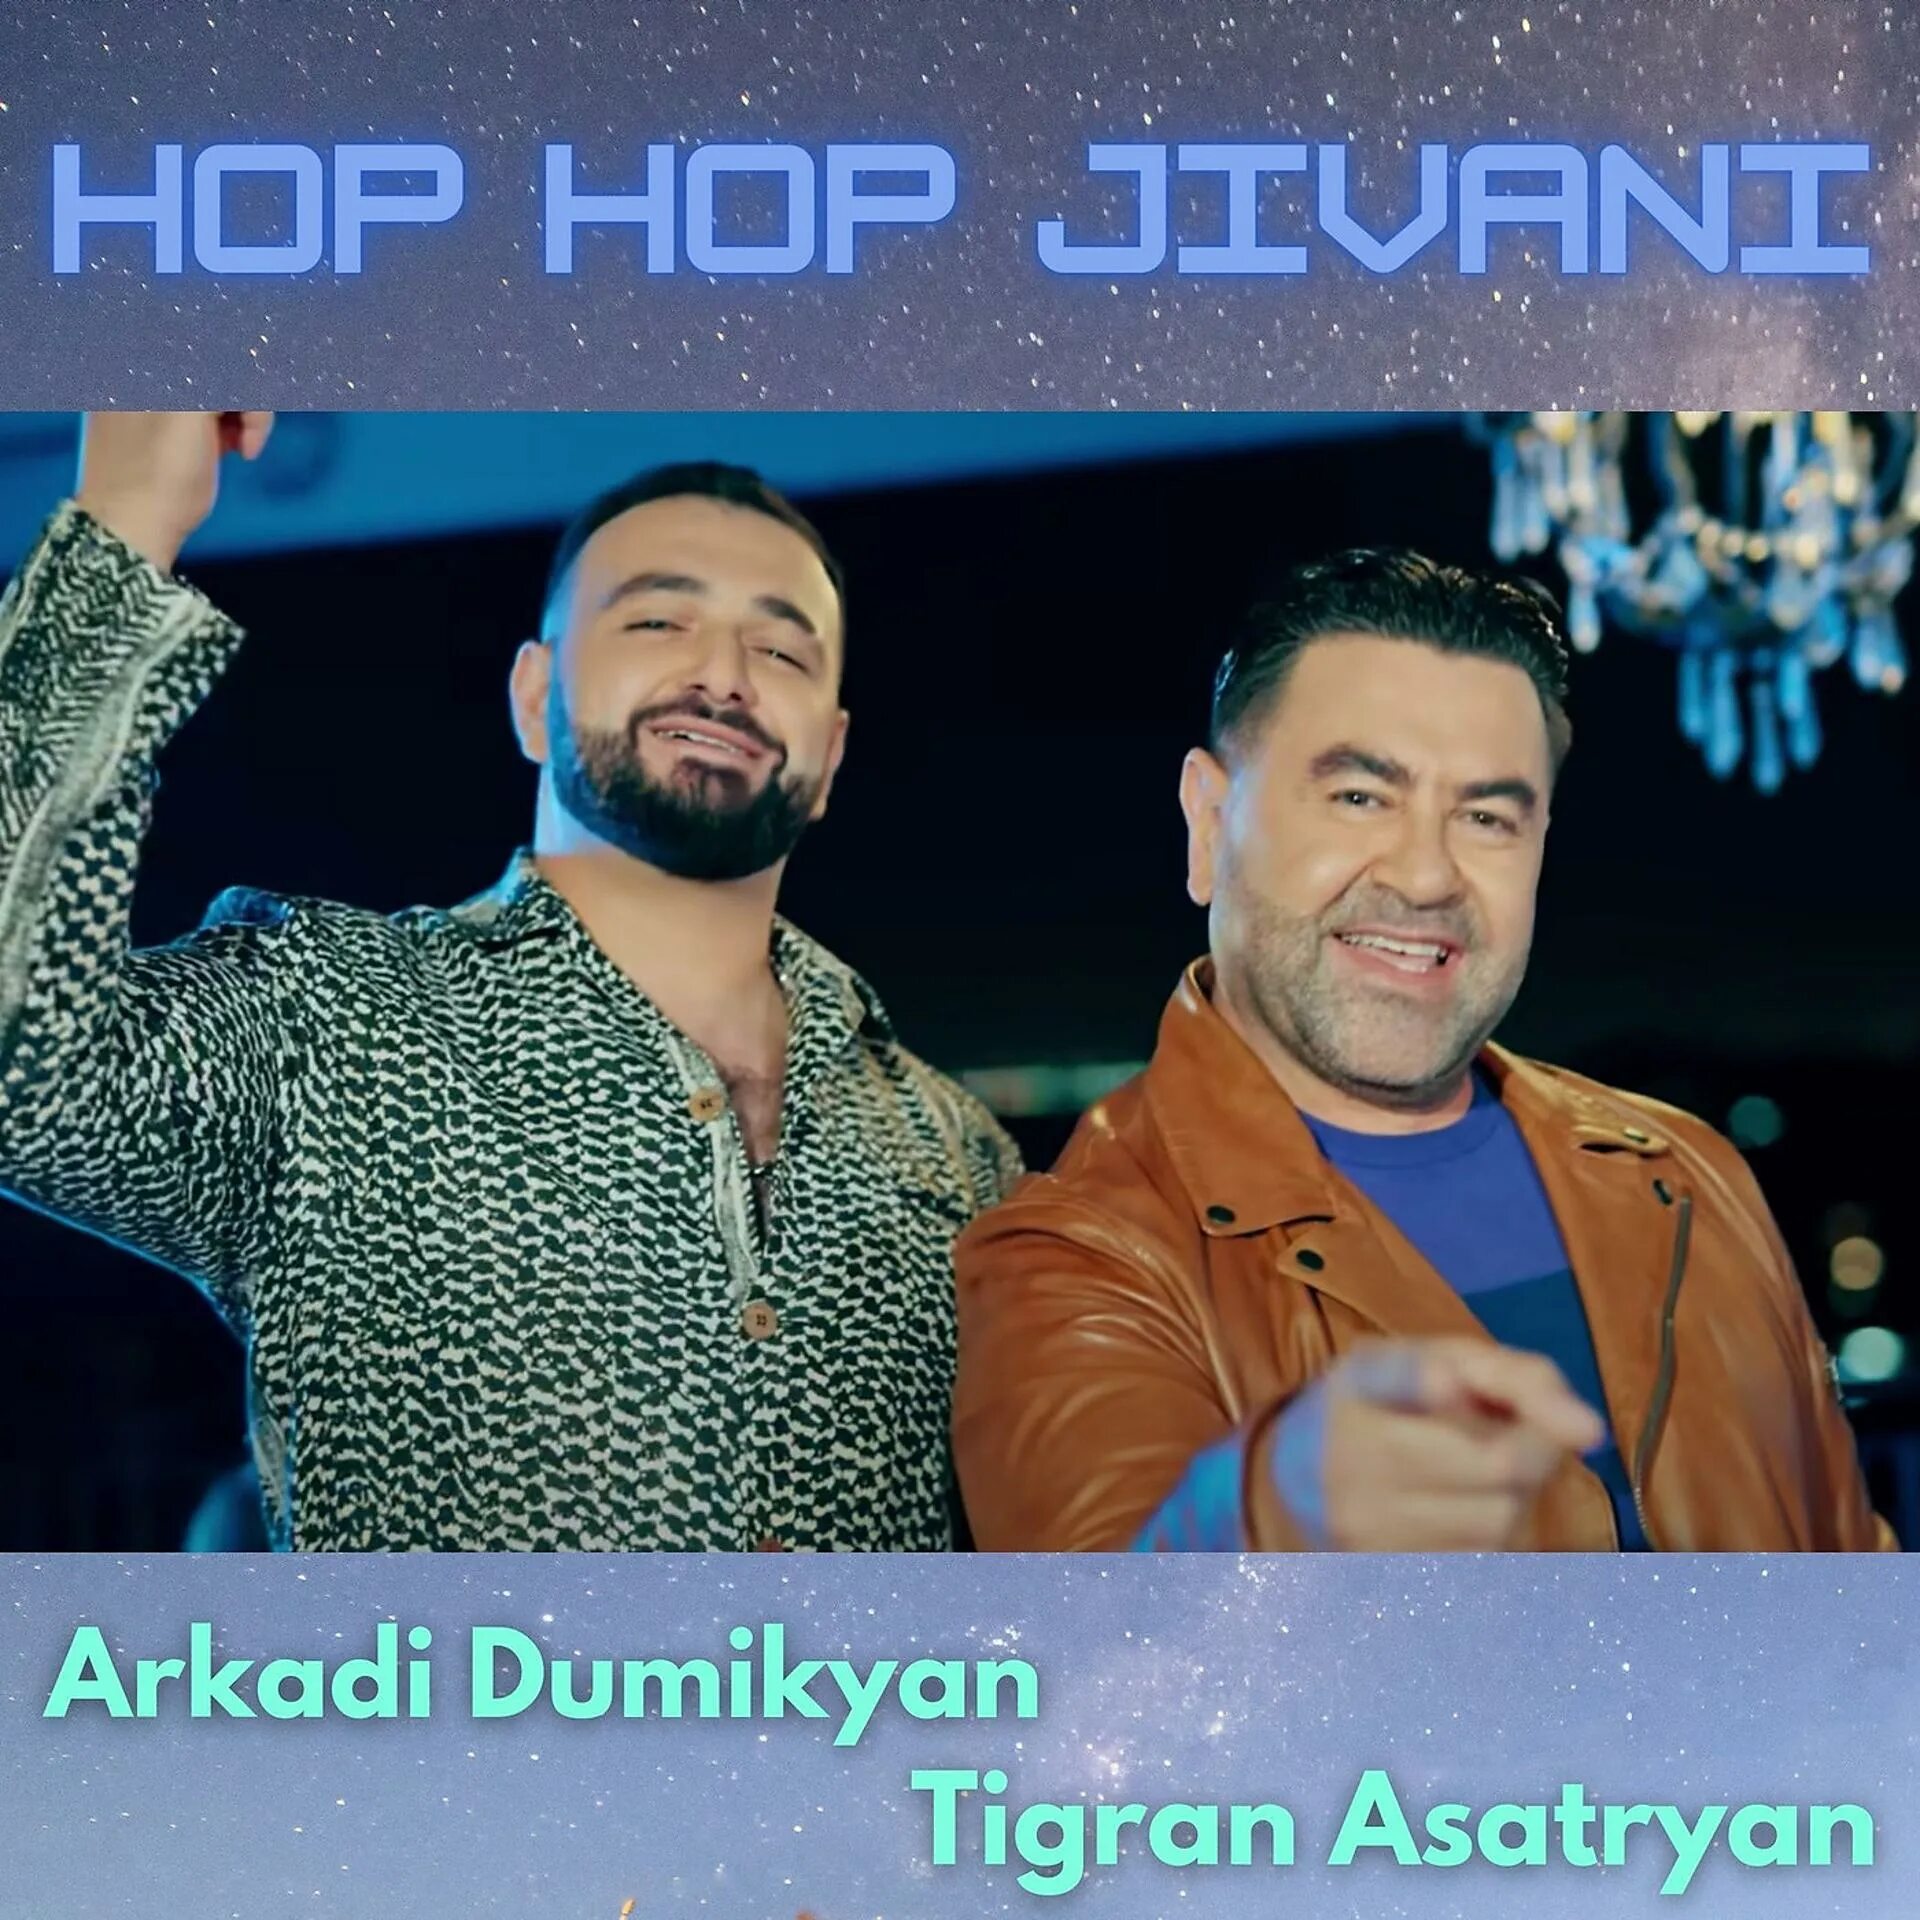 Армянская песня хоп хоп хоп